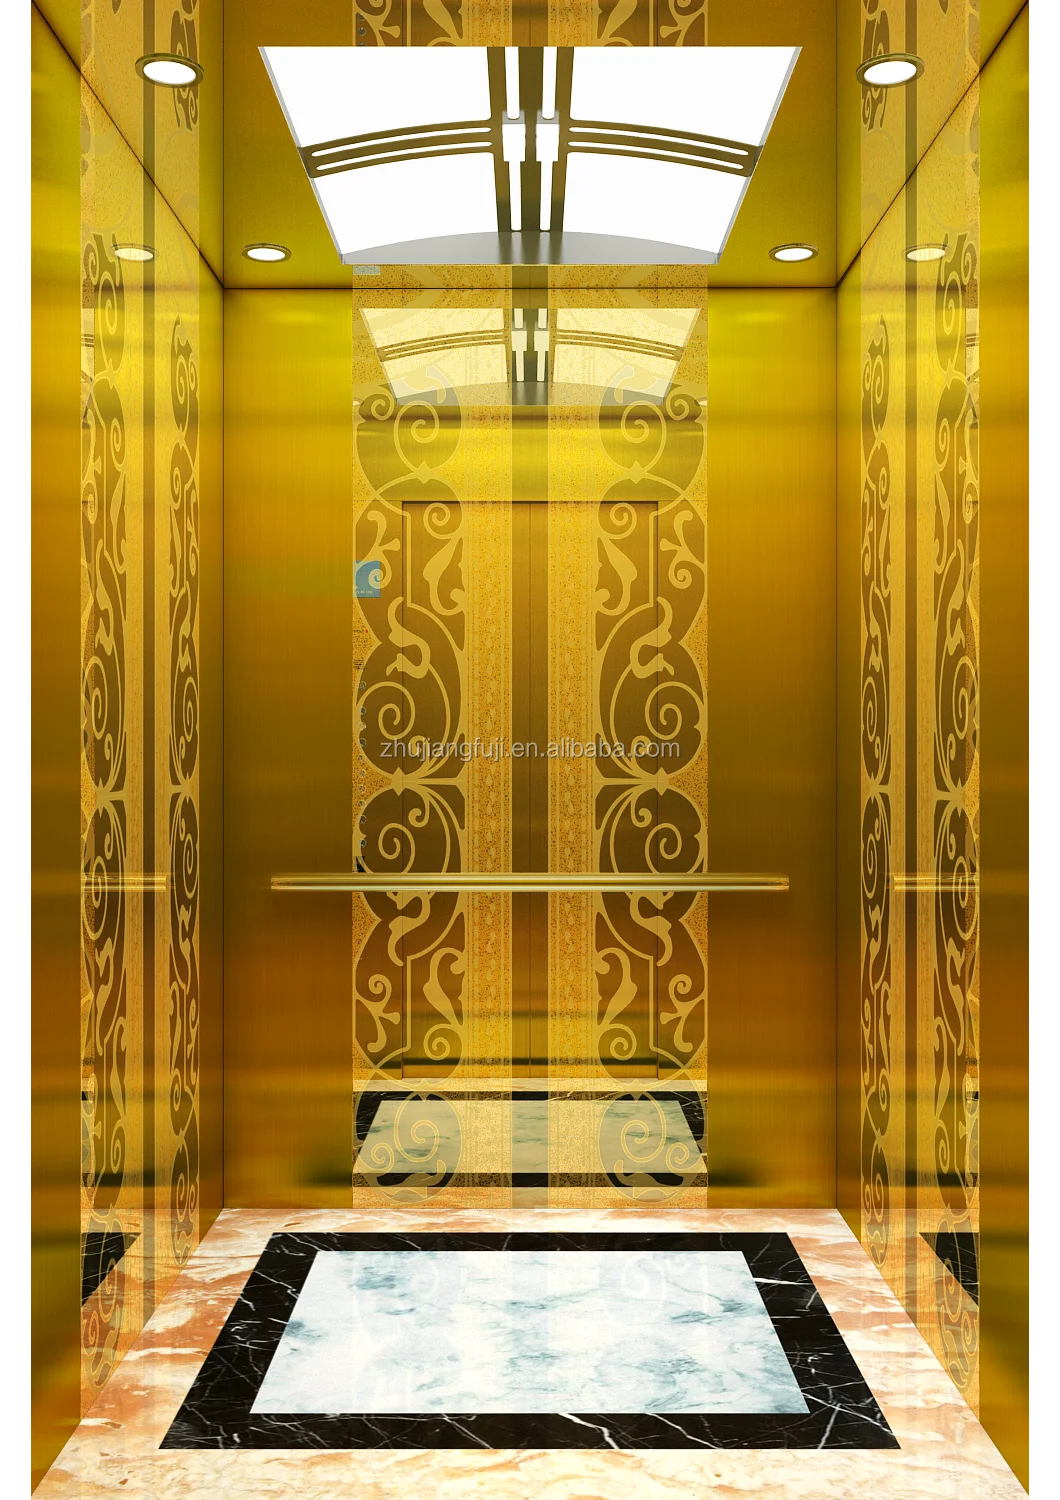 Hot Sale elevators business elevator 8 passenger lift price fuji elevator